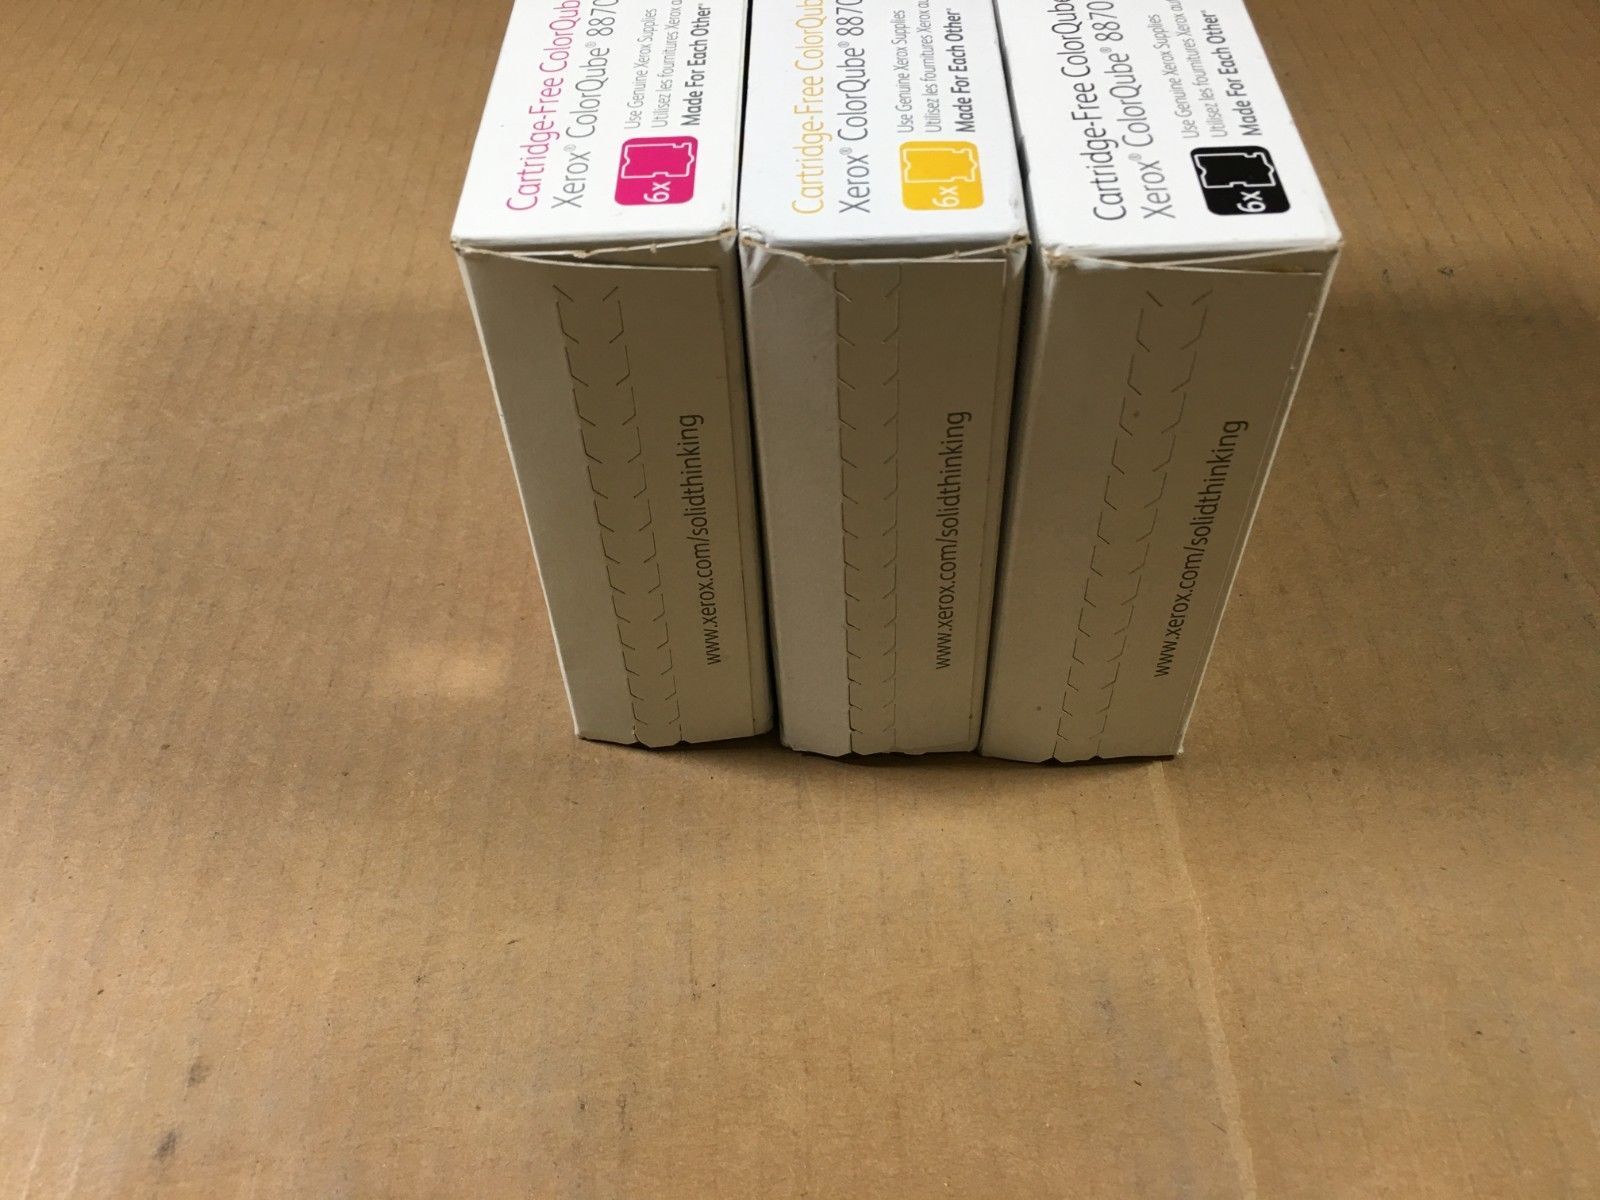 Xerox ColorQube 8870 108R00951- 53 MYK Toner Cubes  -FedEx 2Day Air!! - copier-clearance-center